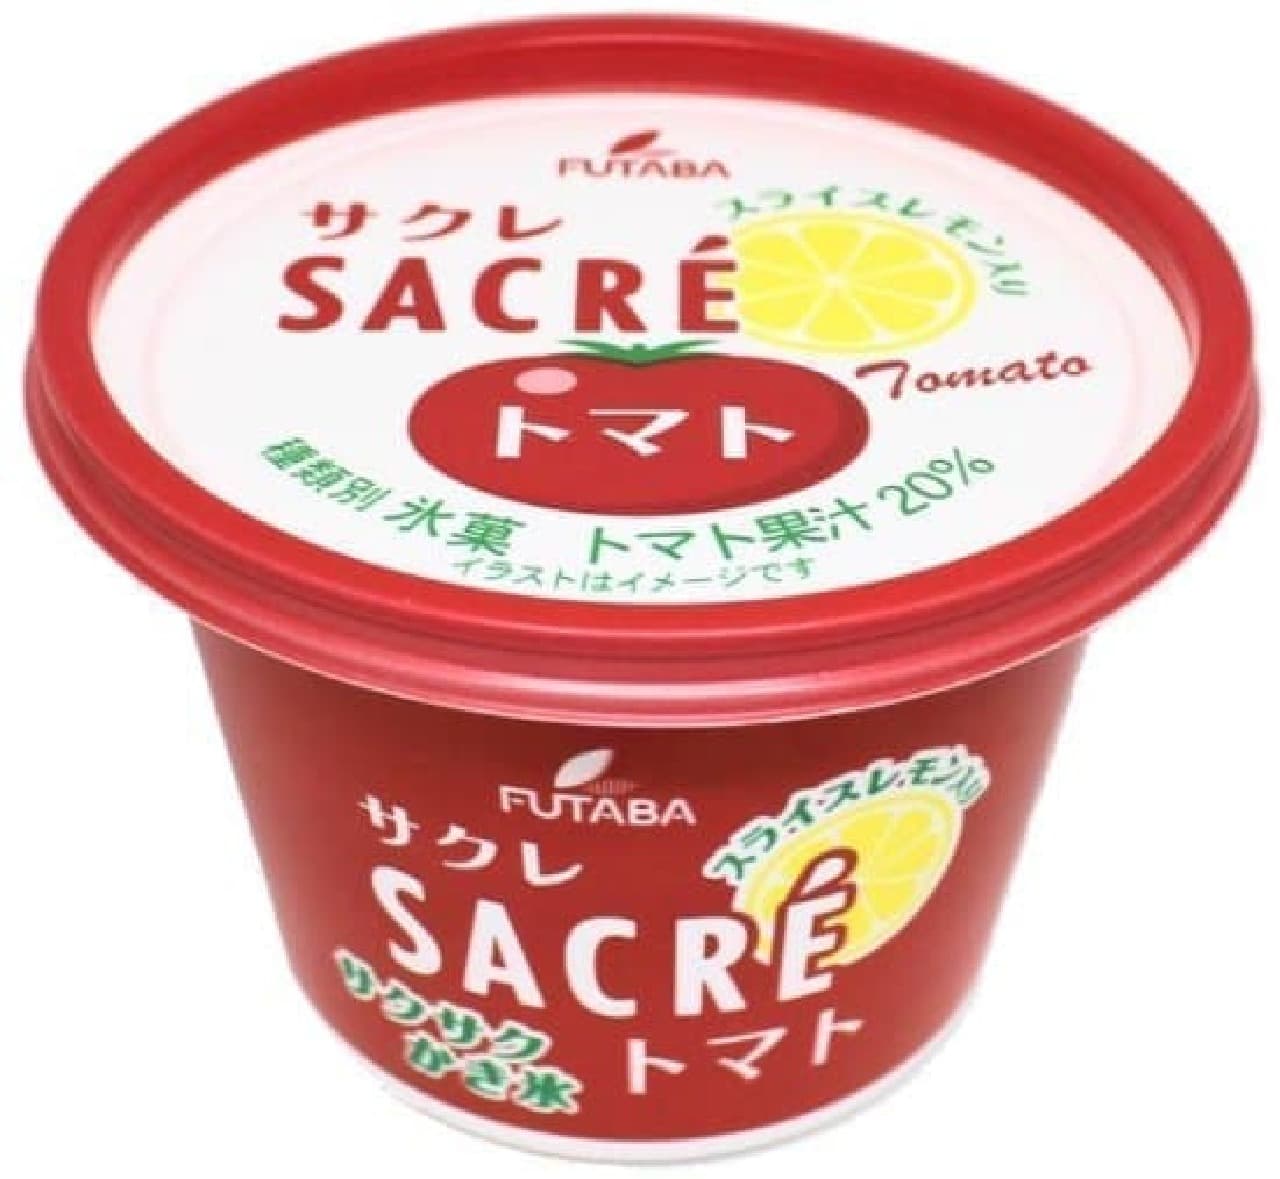 Futaba Foods "Sacre Tomato"